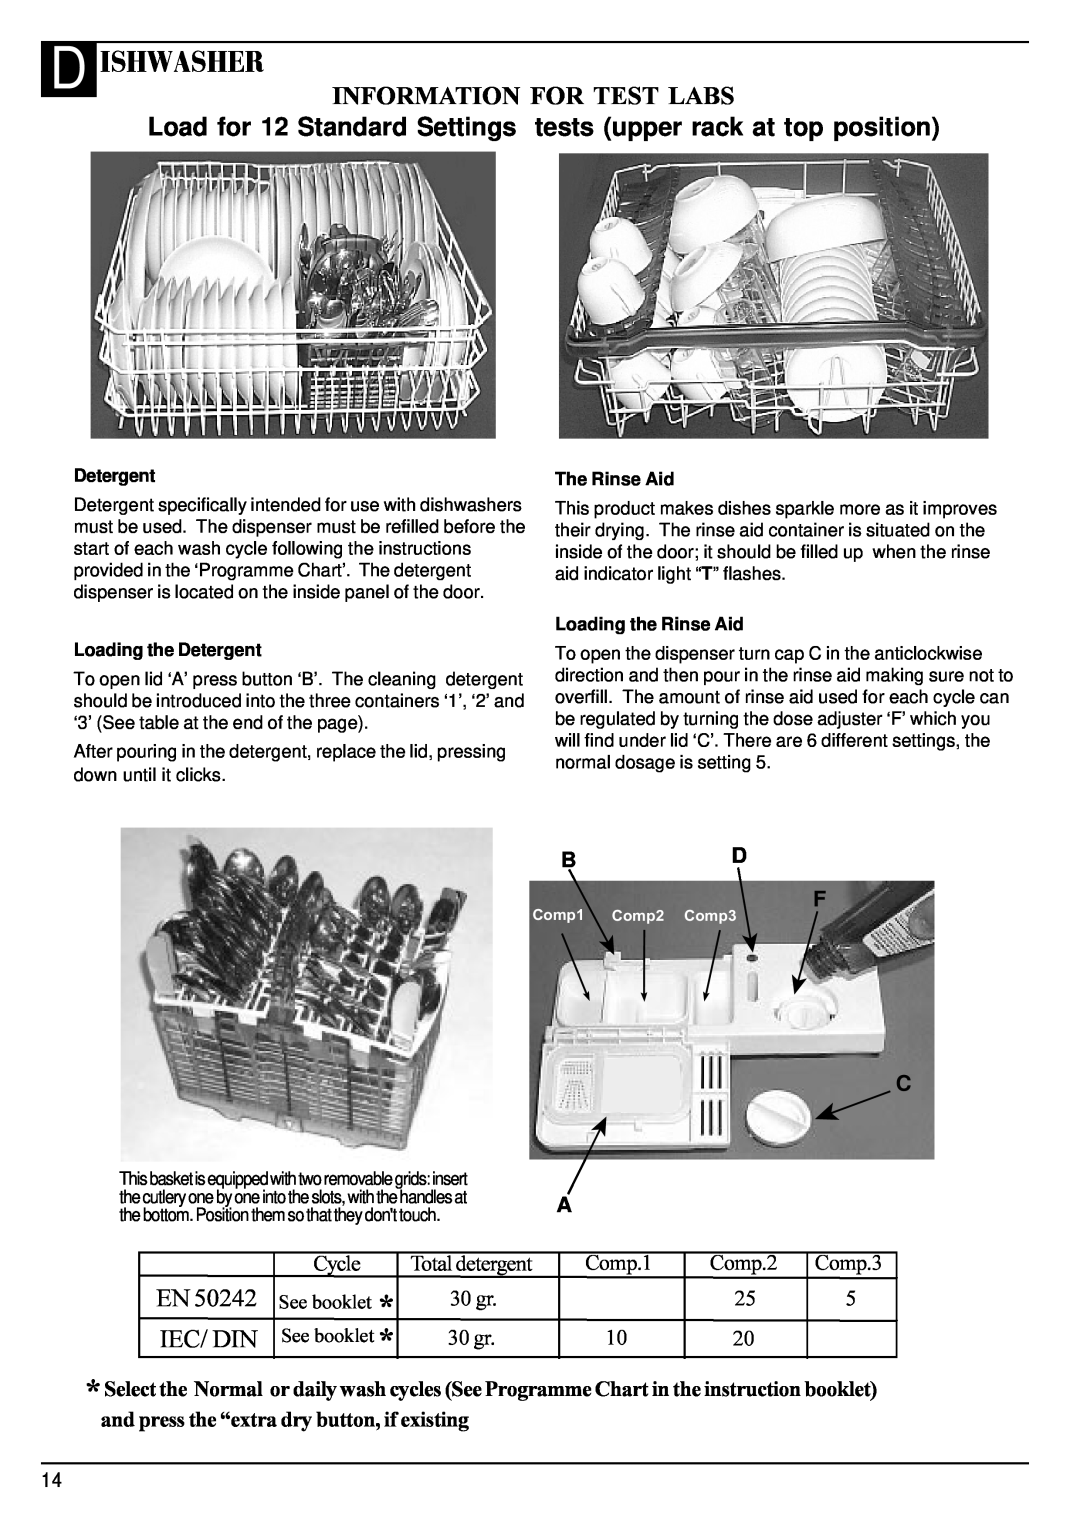 Hotpoint BFV680 Load for 12 Standard Settings tests upper rack at top position, D Ishwasher, Information For Test Labs 